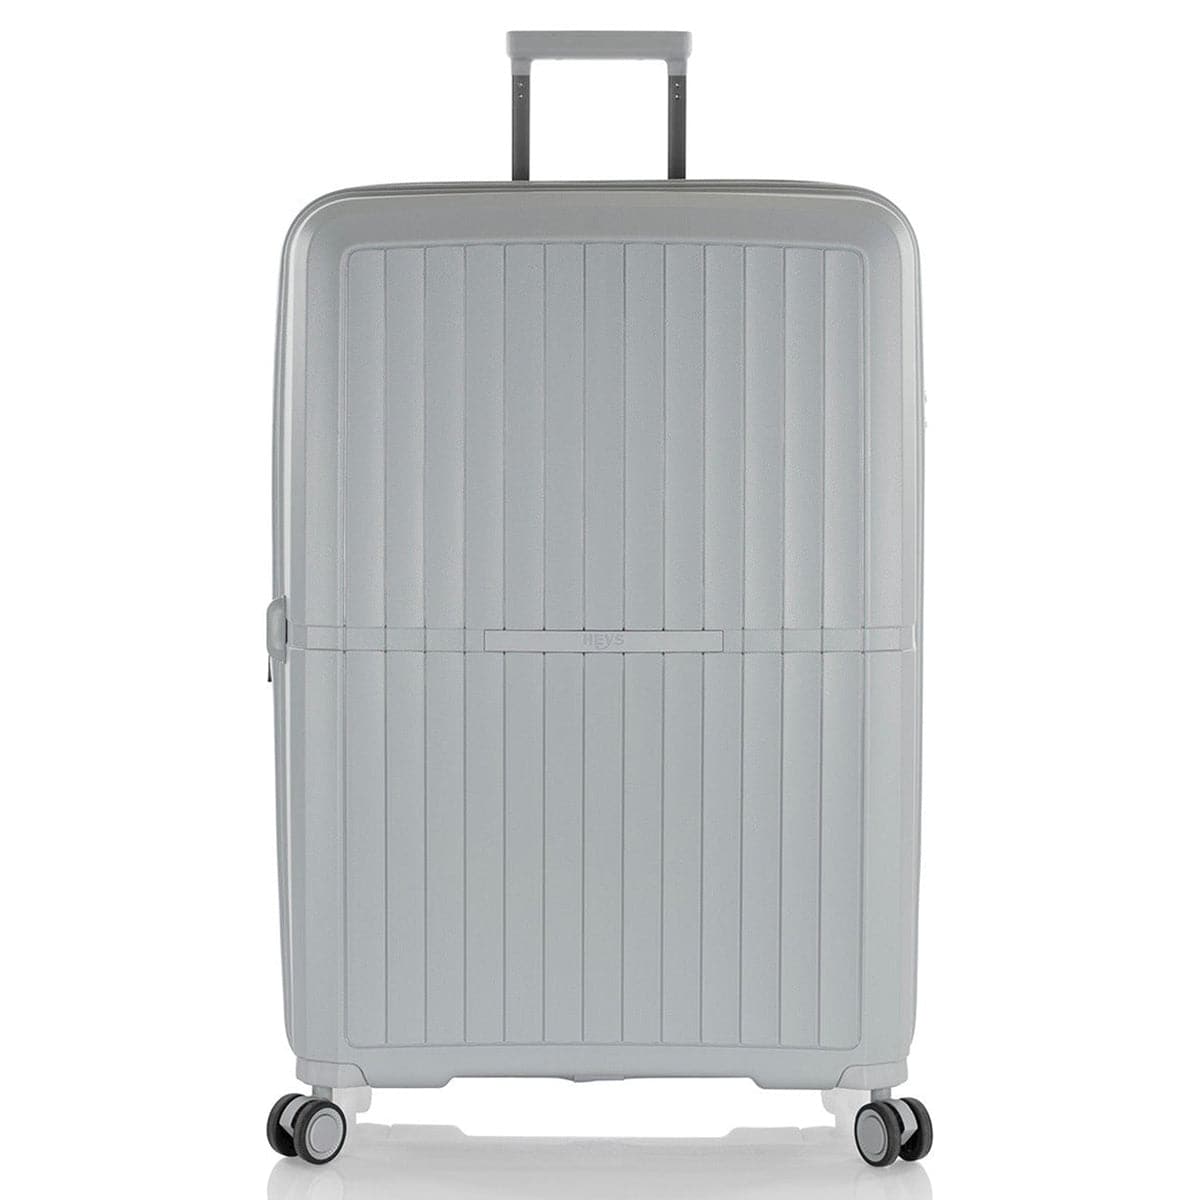 Heys Airlite 30" Spinner Luggage